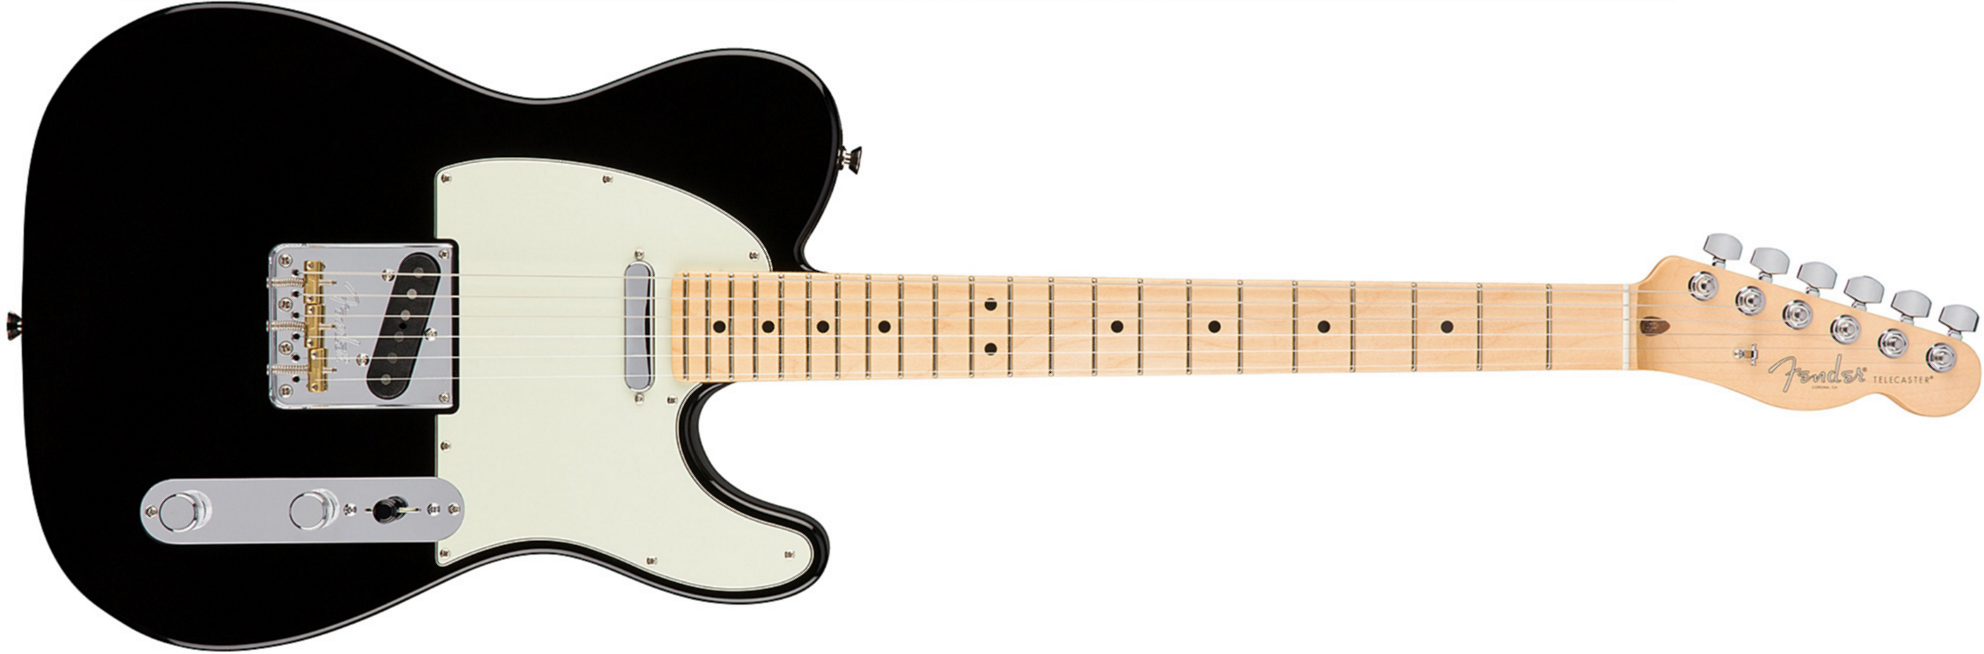 Fender Tele American Professional 2s Usa Mn - Black - Televorm elektrische gitaar - Main picture